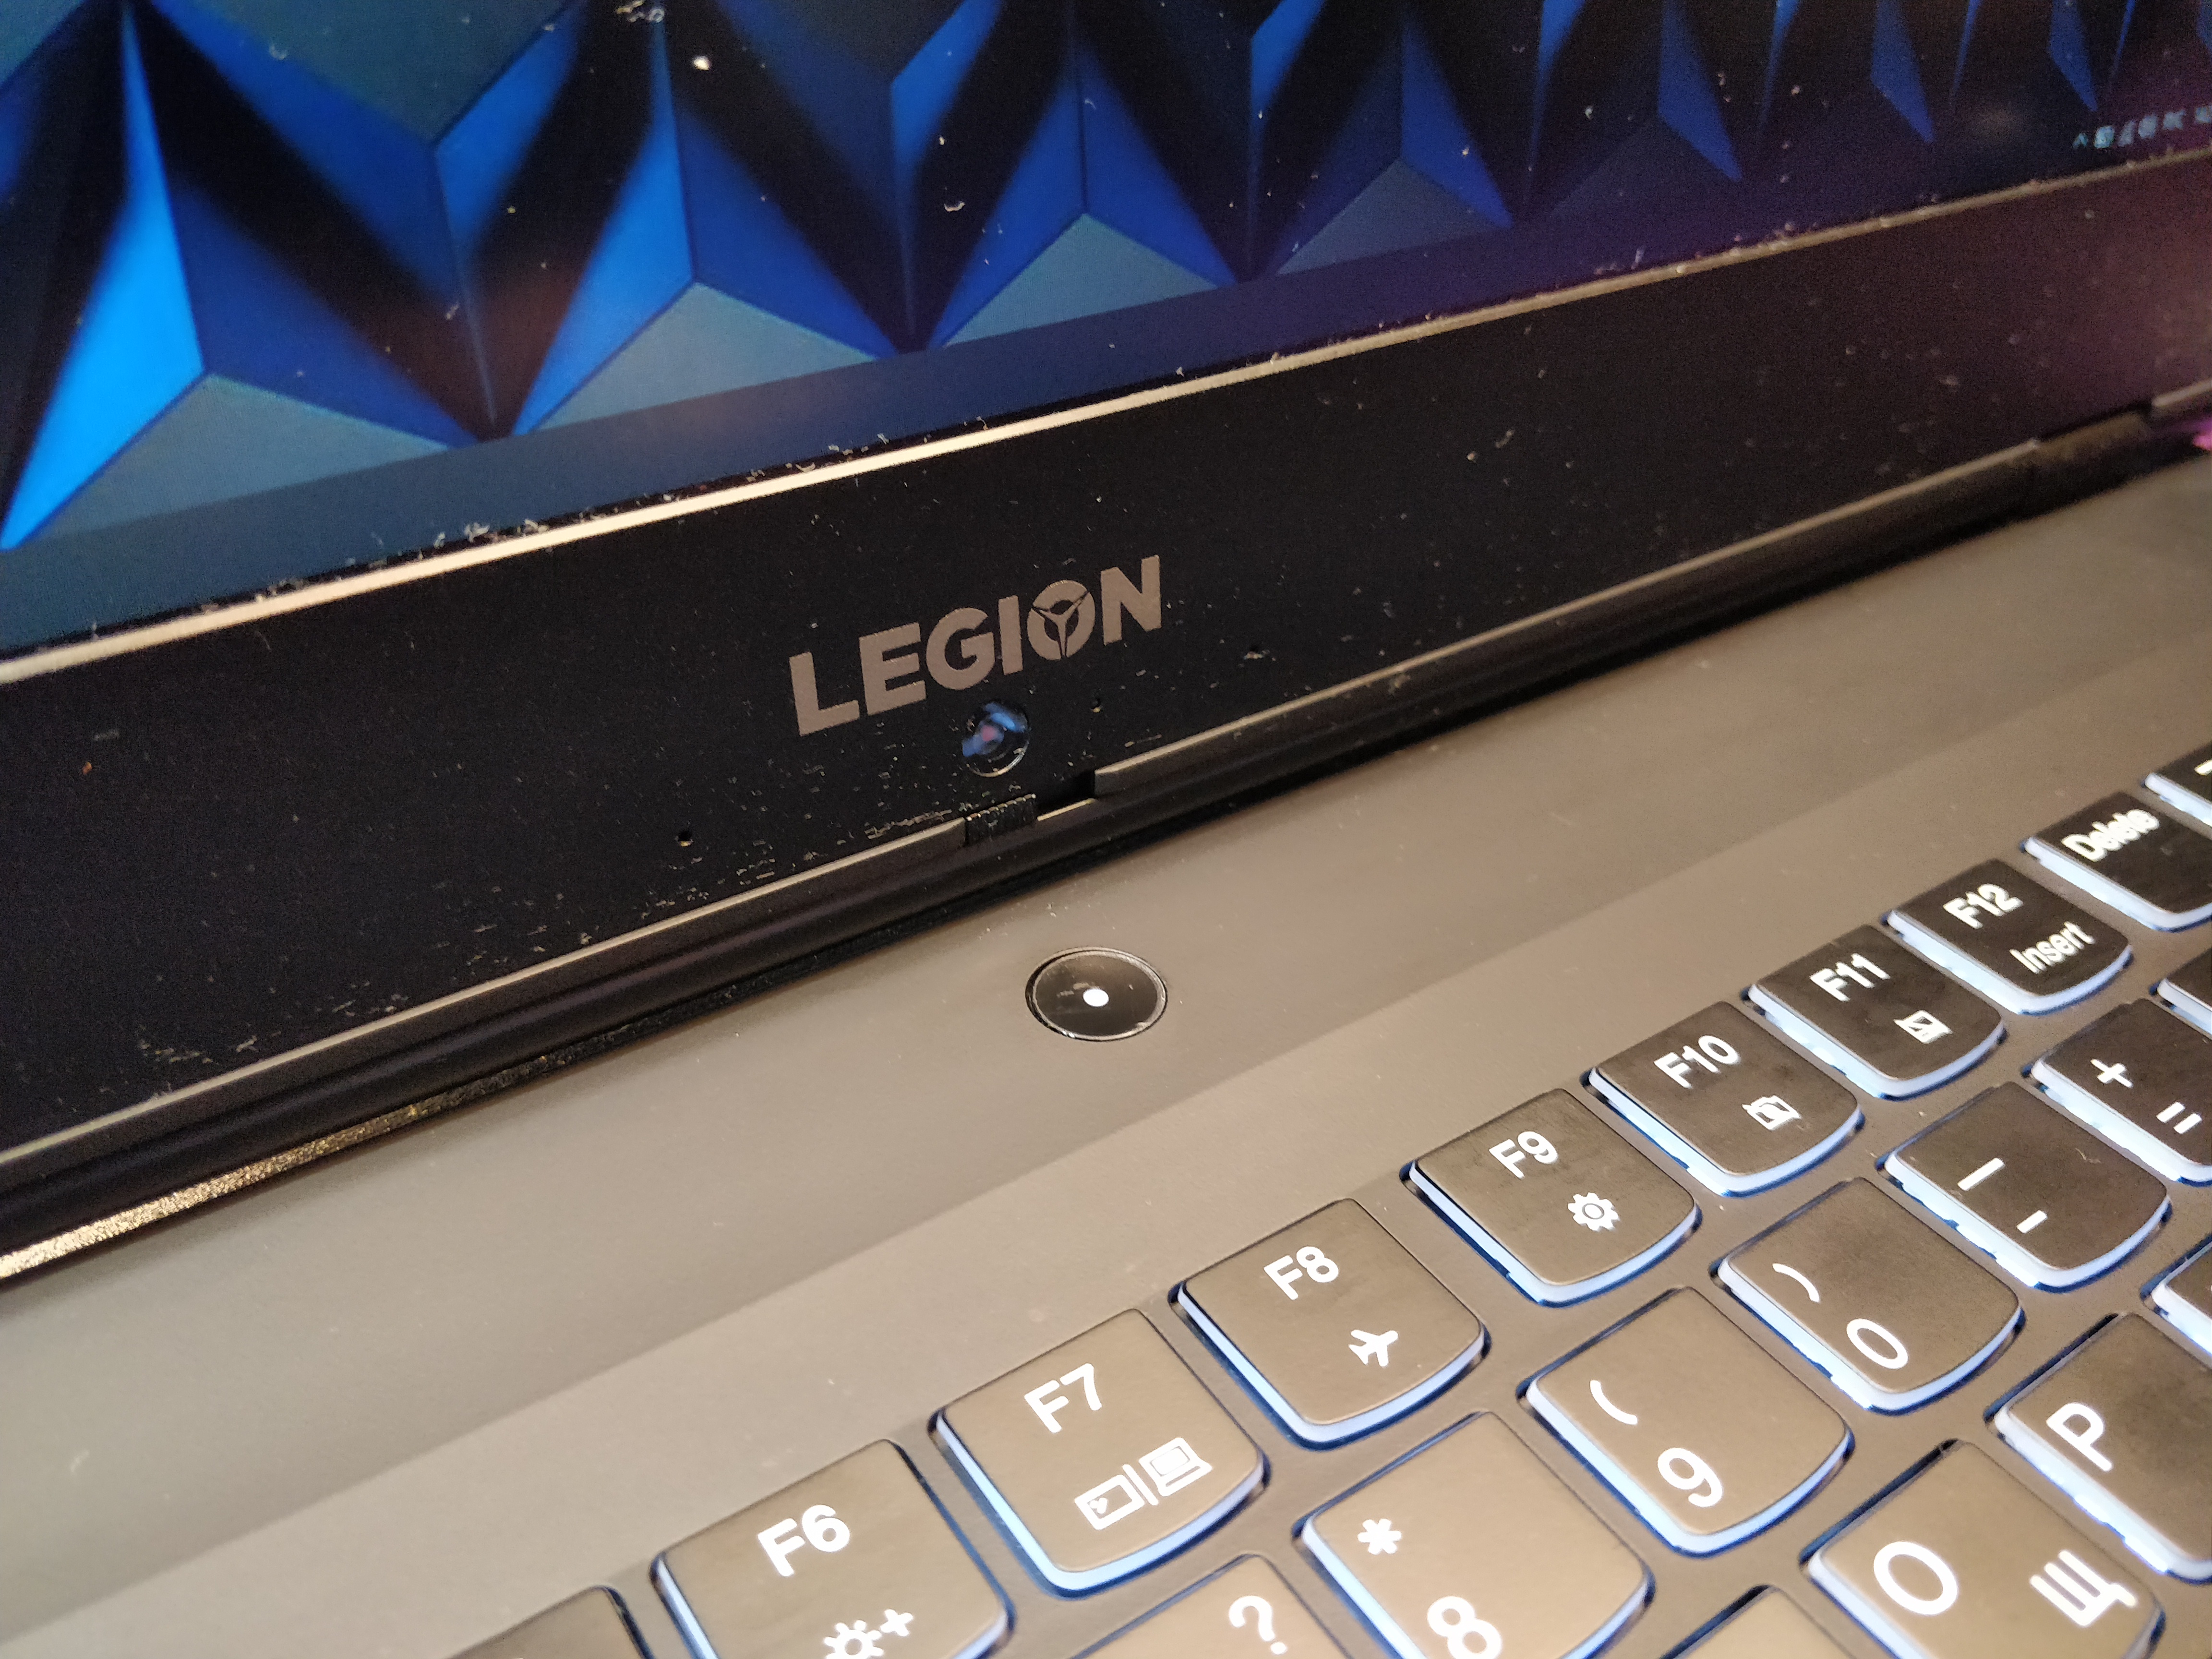 Ноутбук Легион Цена